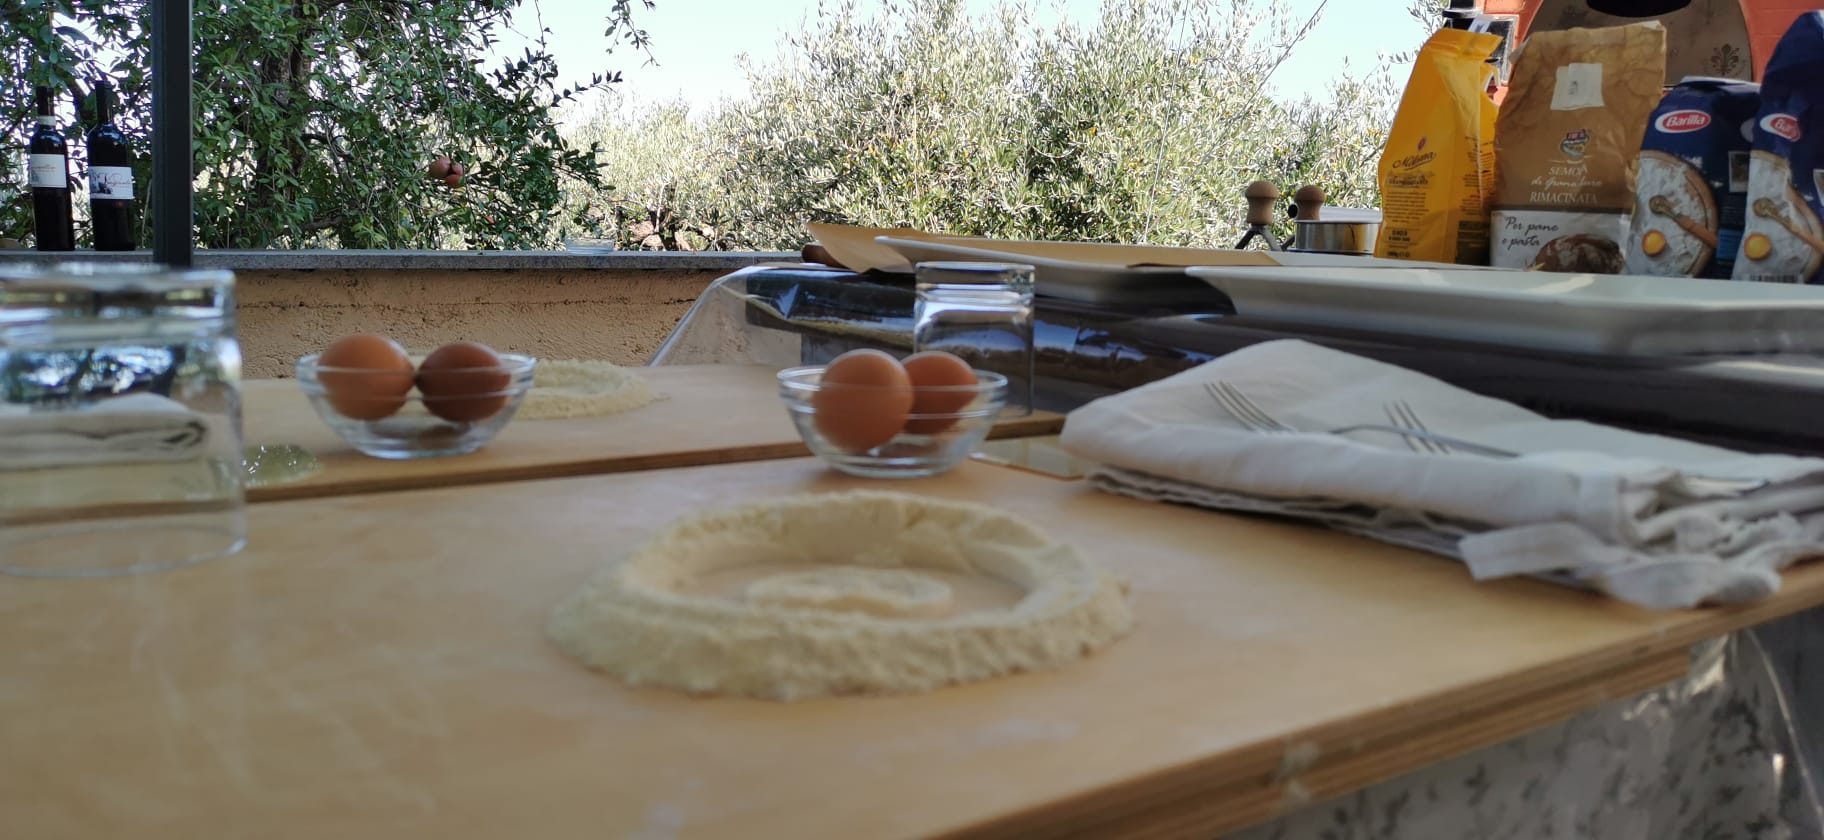 Pasta-Making Class at Minardi Frascati Winery (10)